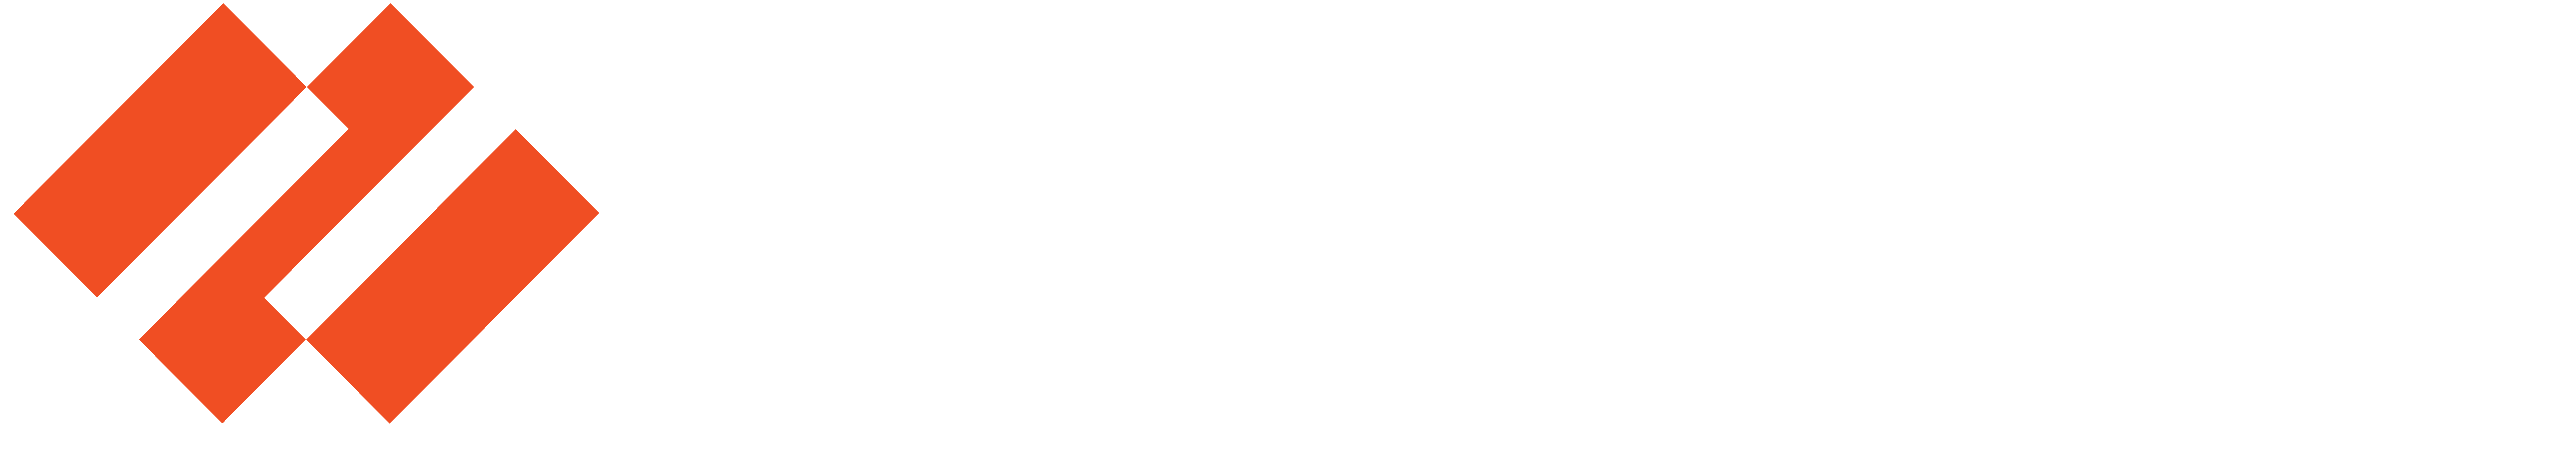 PaloAltoNetworks_2020_Logo.svg (1)